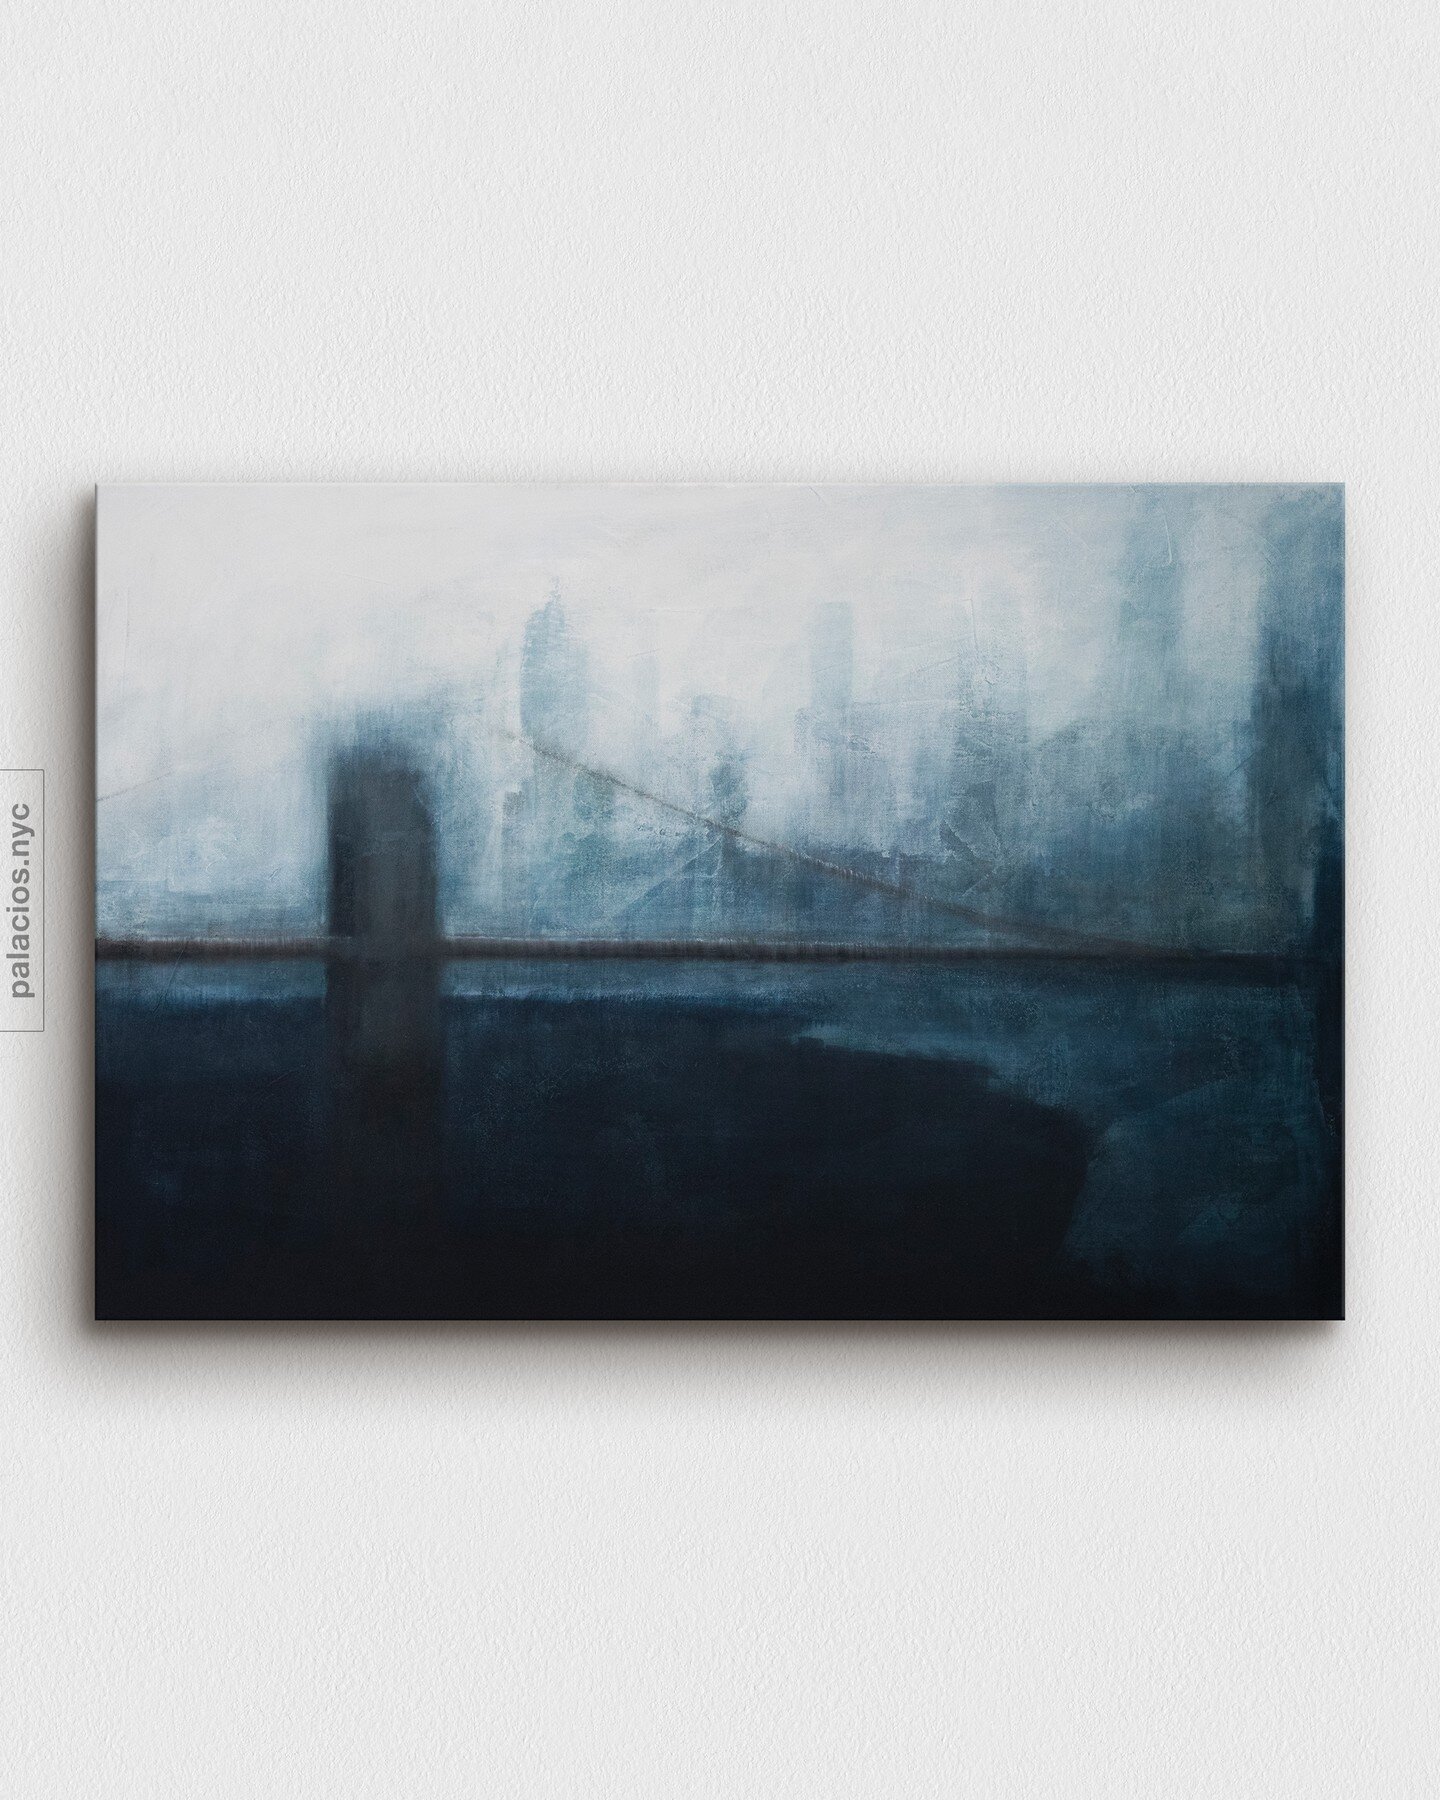 &lsquo;Blue Mist&rsquo;
Mixed media on canvas
91cm x 61cm

#bluelandscape #cityskyline #abstractlandscape #abstractpainting #abstractartist #jerseycity #skyline #citylandscape #newyorkcity #bridge #nyc